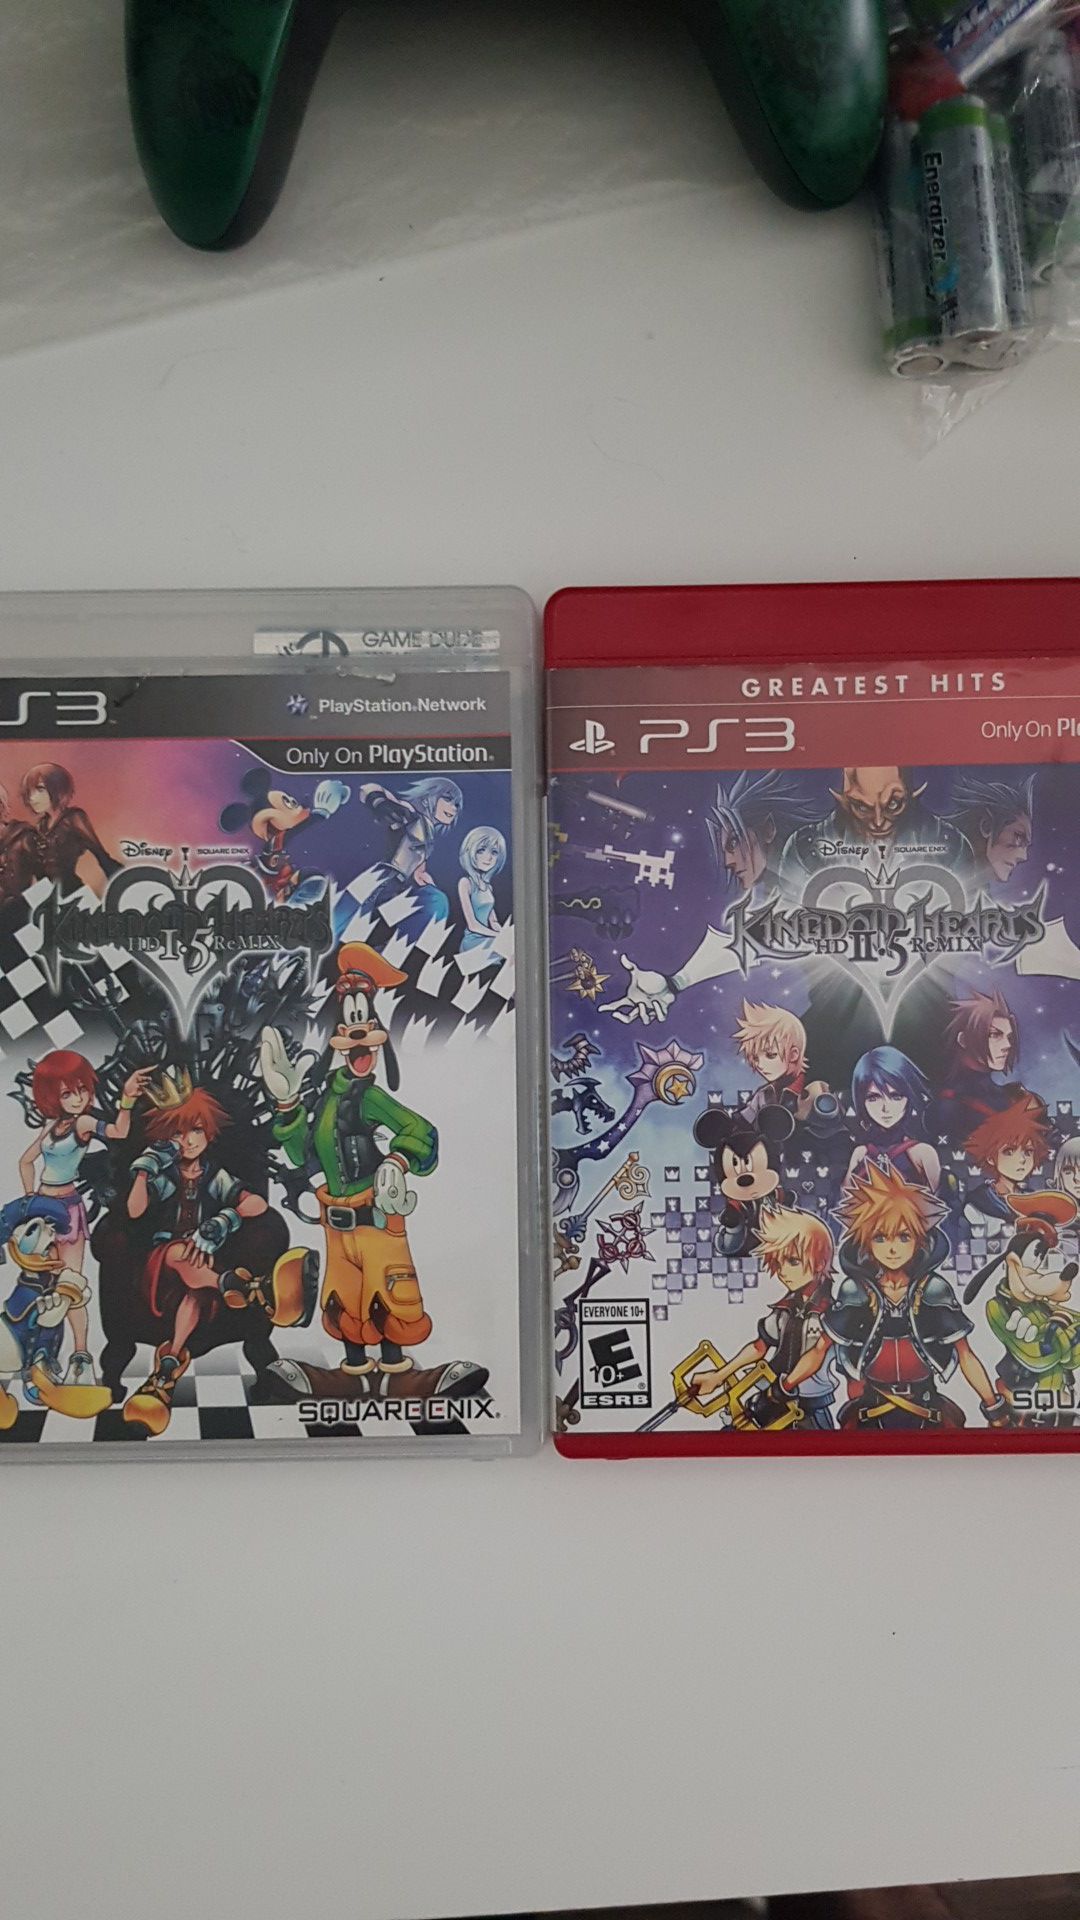 Kingdom Hearts 1.5 remix and 2.5 remix